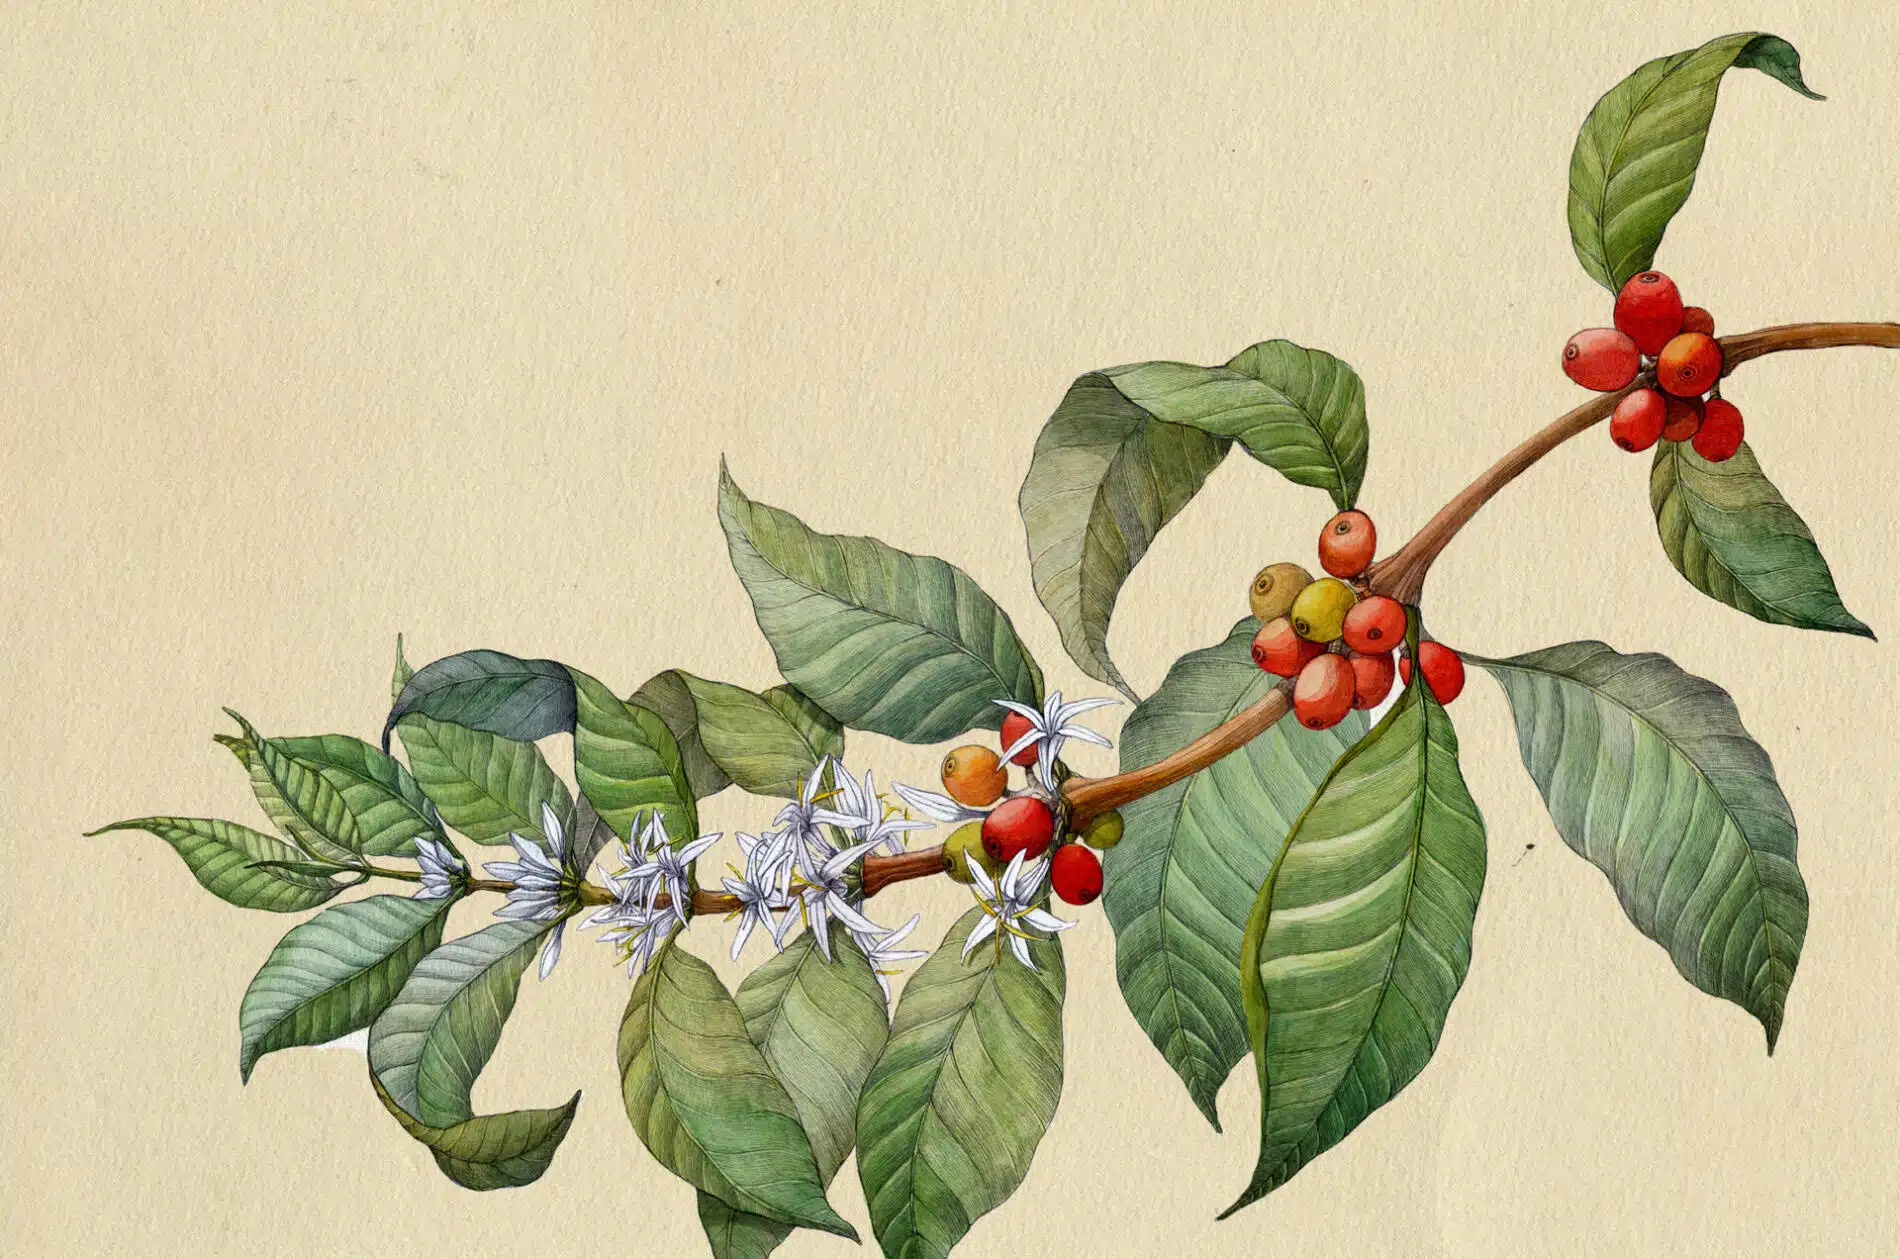 Lina Kusaite ilustraciones botanicas cafe